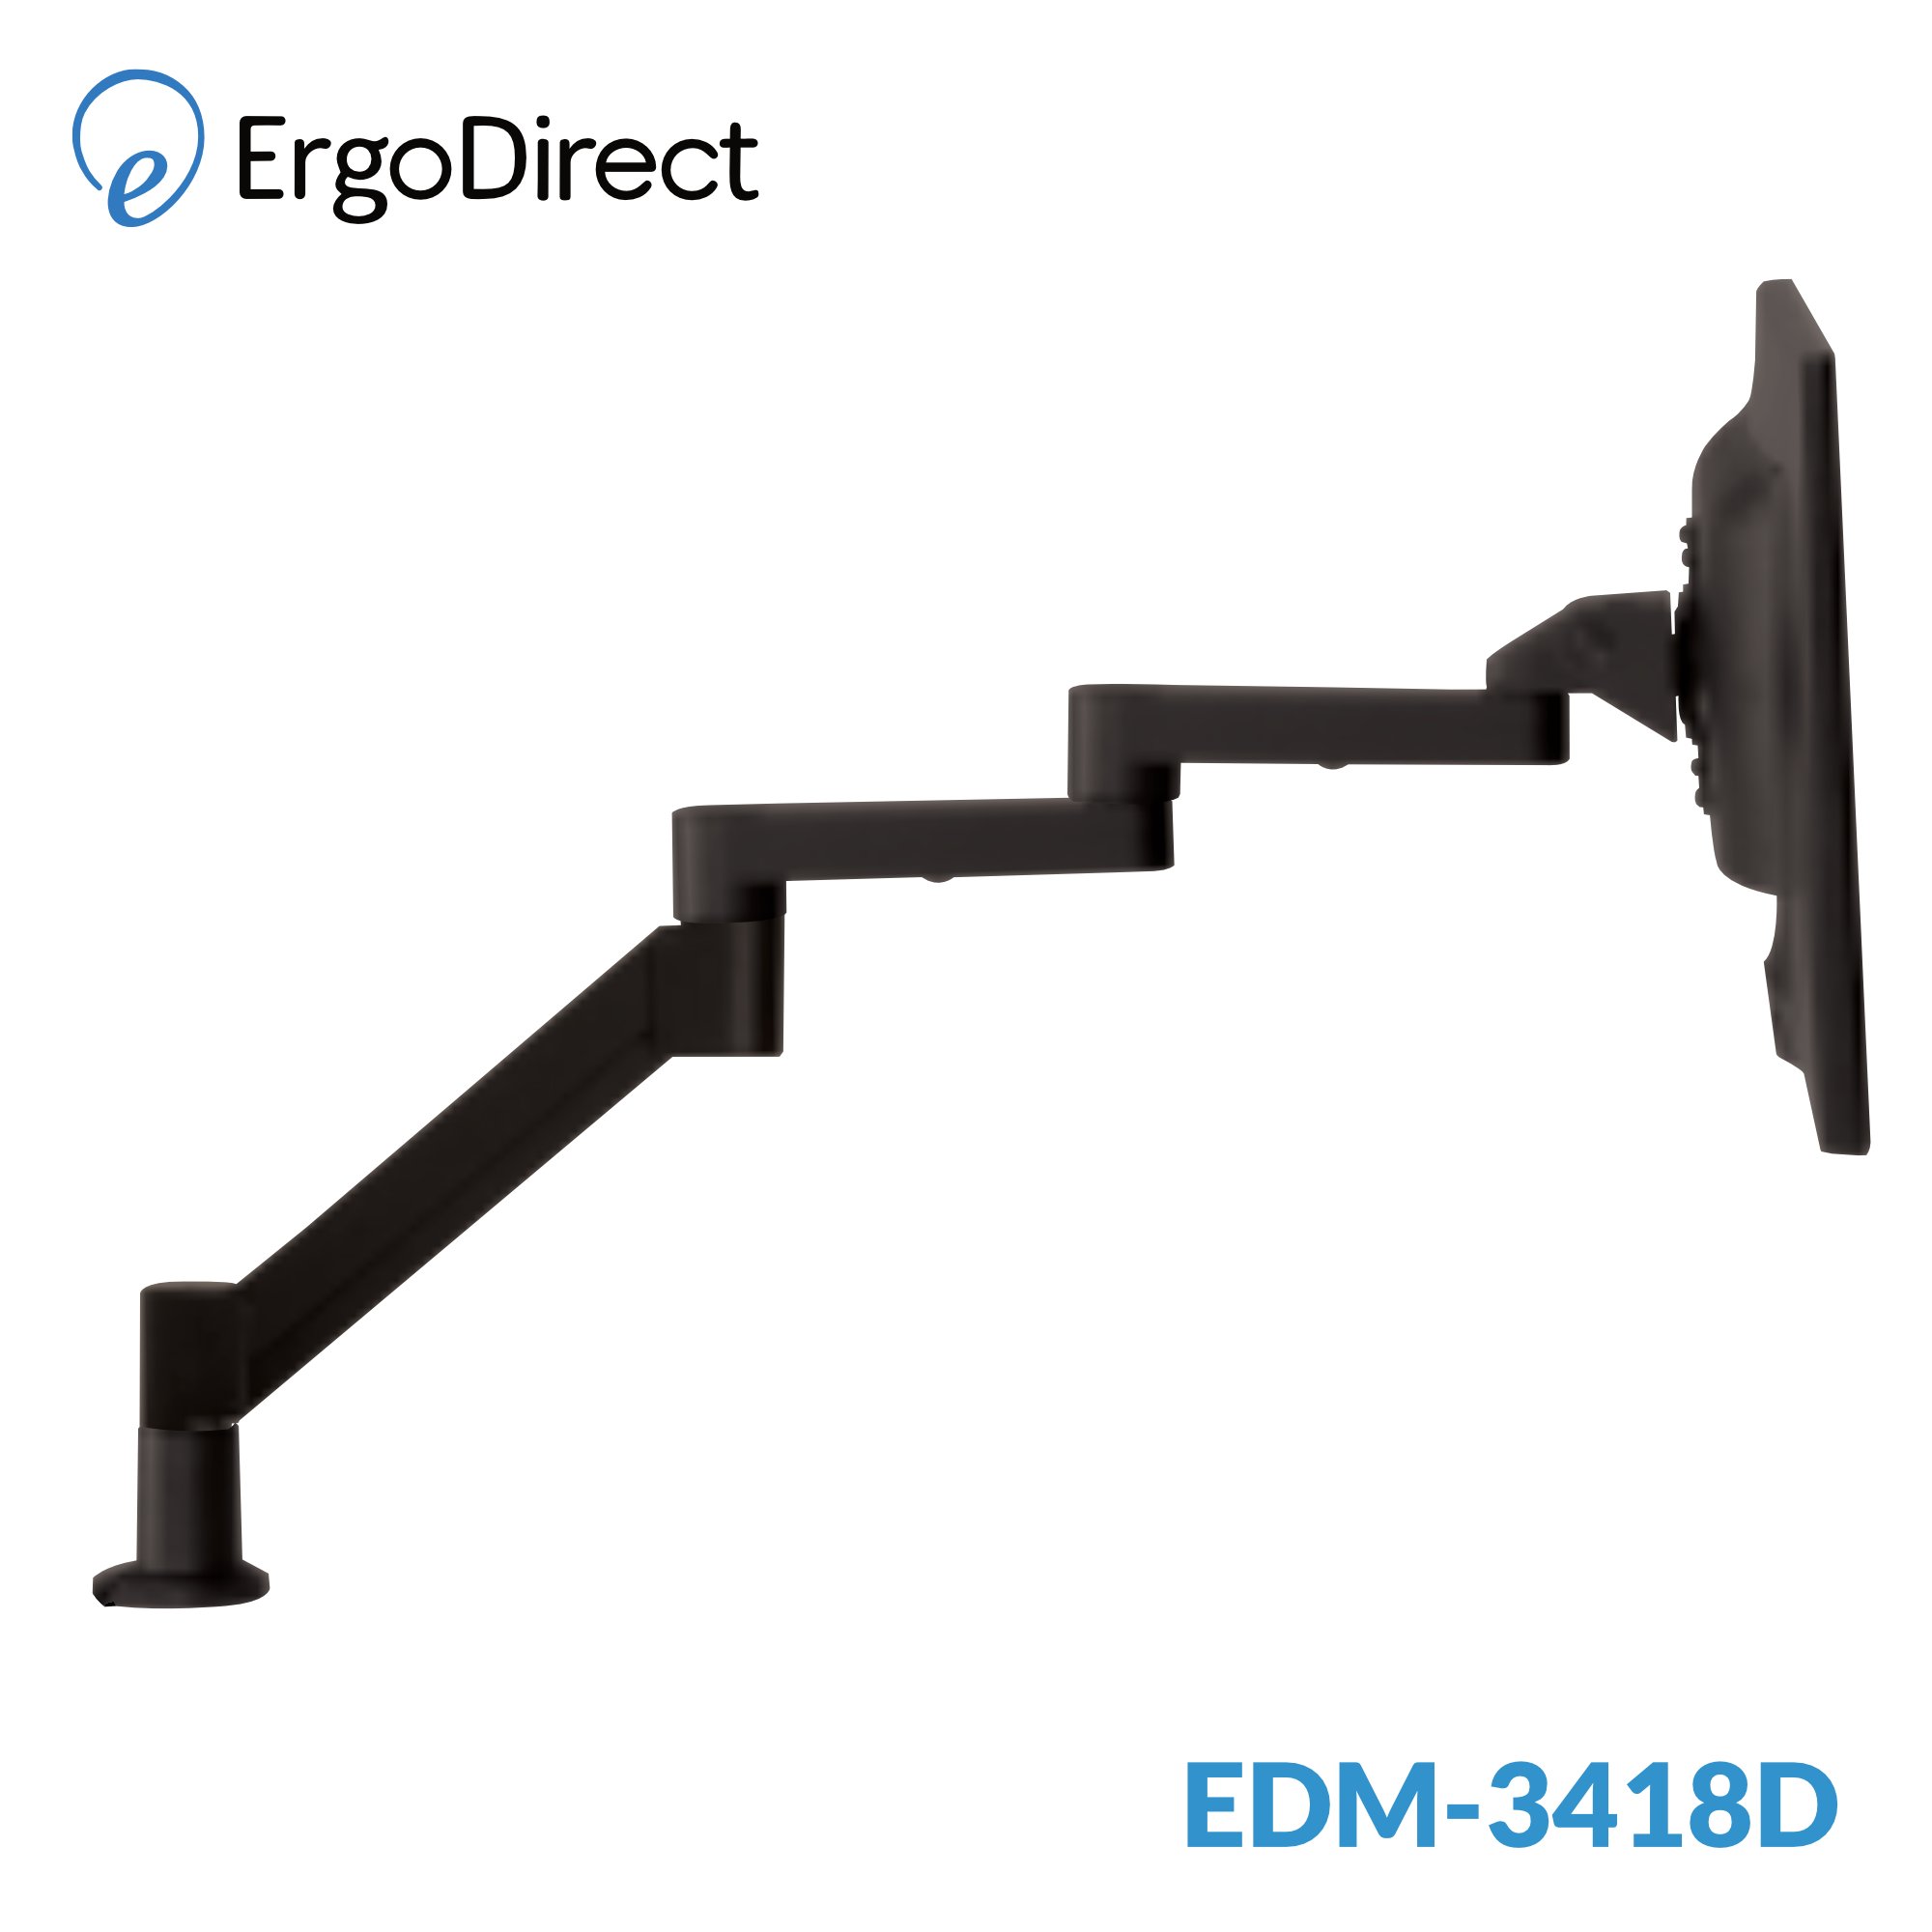 ErgoDirect EDM-3418D Long Reach Desk Mount Monitor Arm